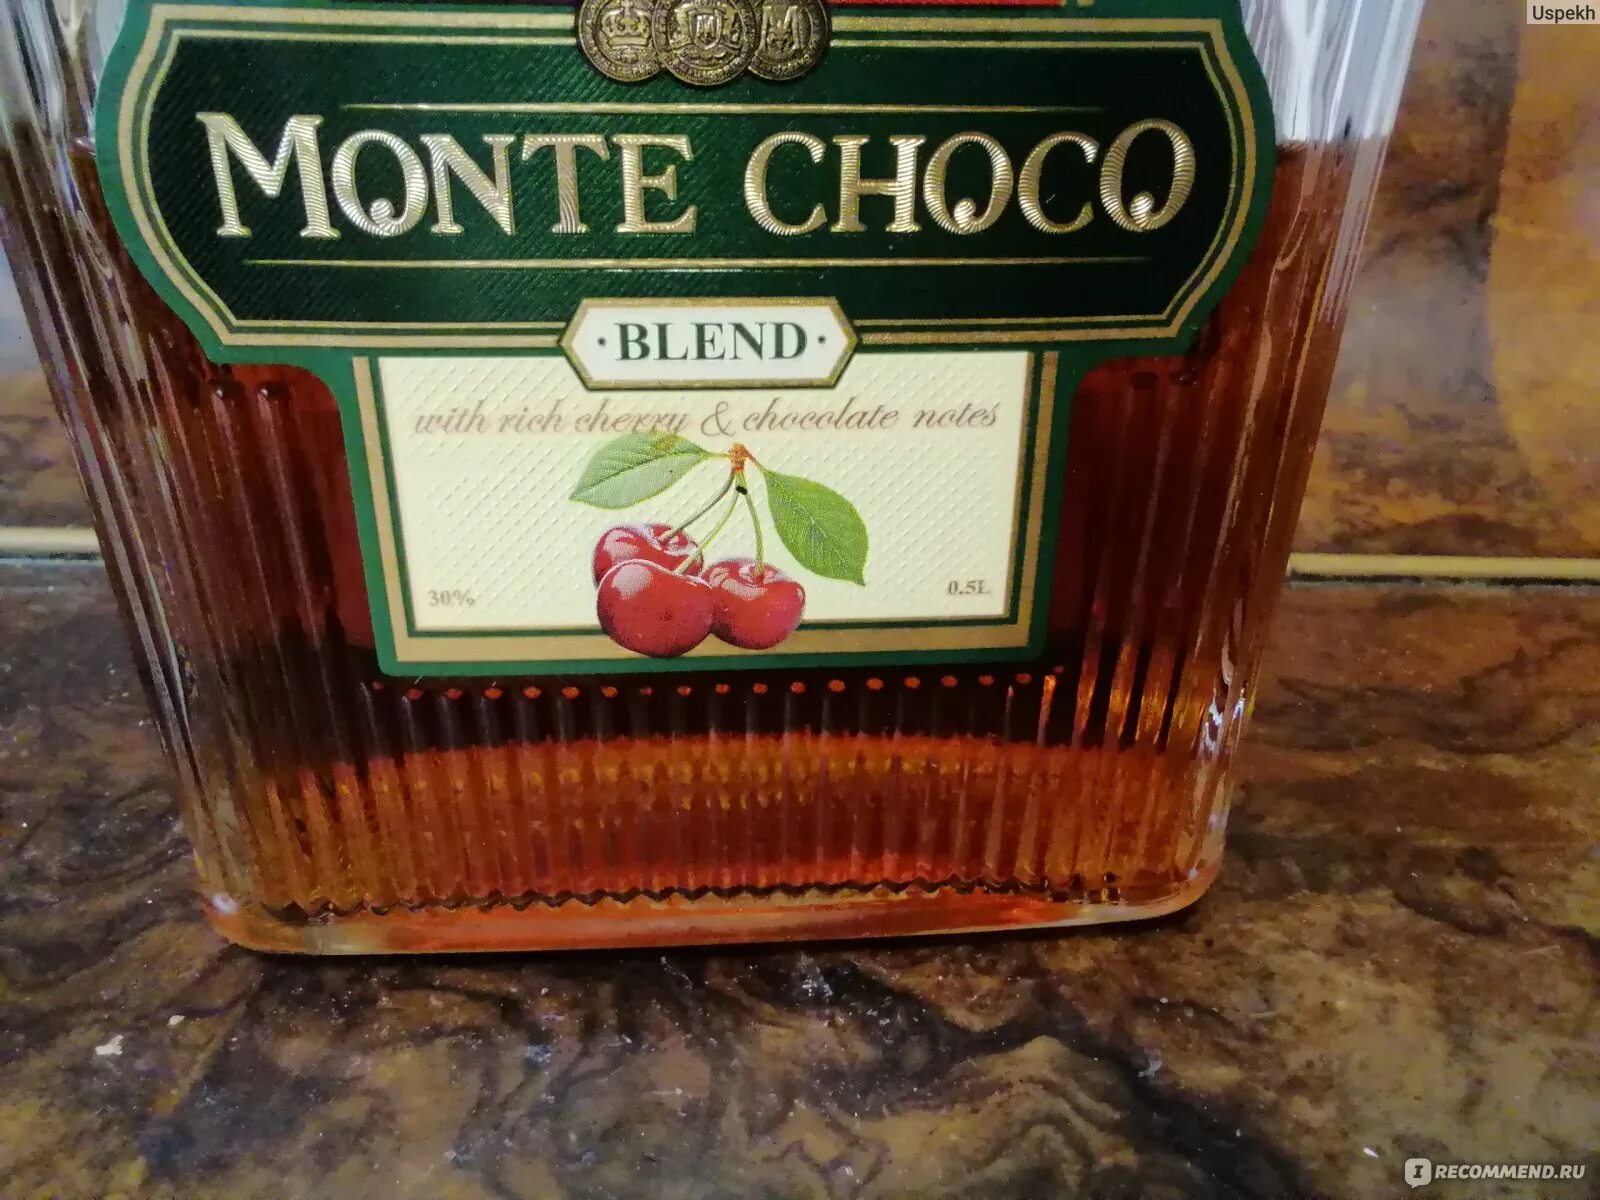 Monte choco irish. Монте Чоко коньяк вишня. Монте Чоко Blend. Монте шоко вишня. Коктейль Монте Чоко.